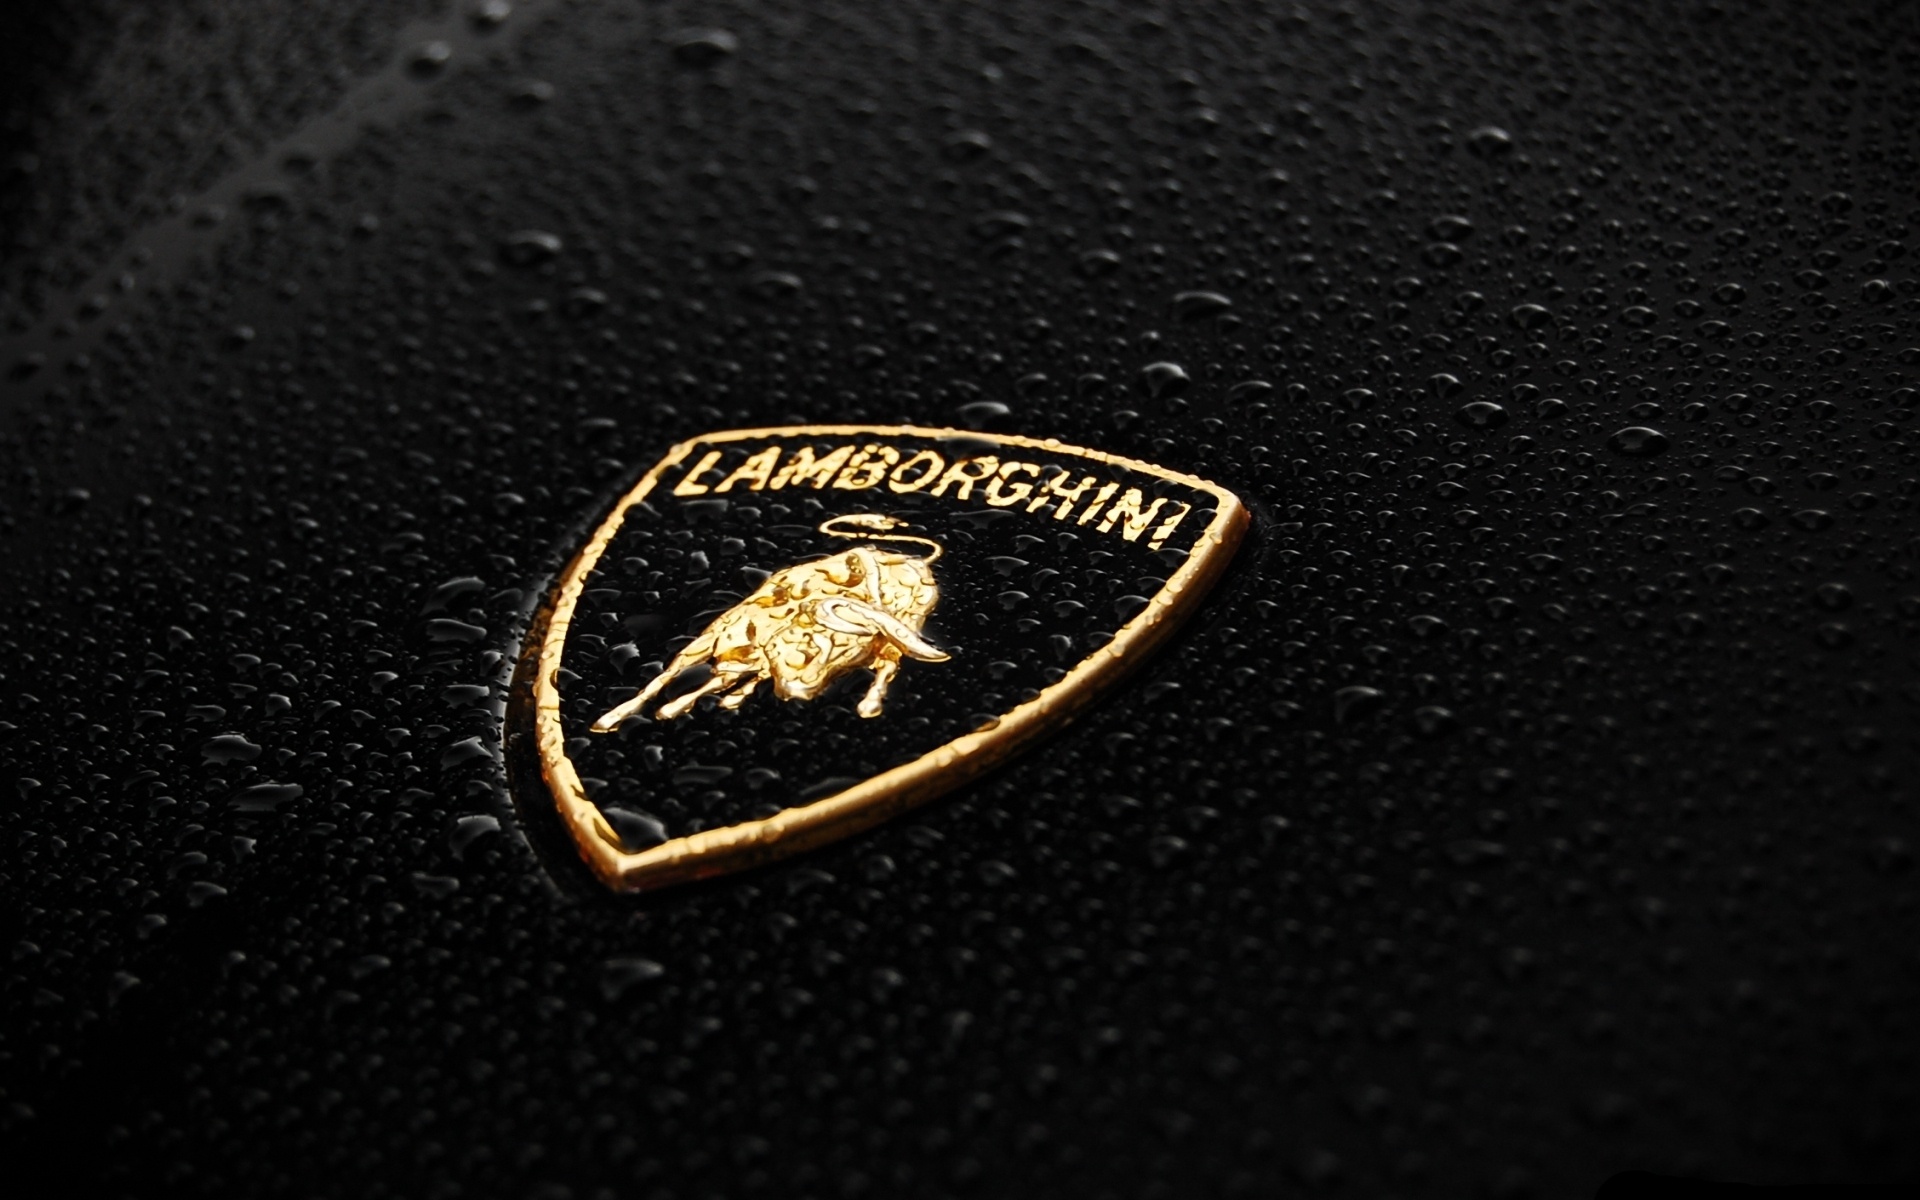     Lamborghini              1920x1200 -  